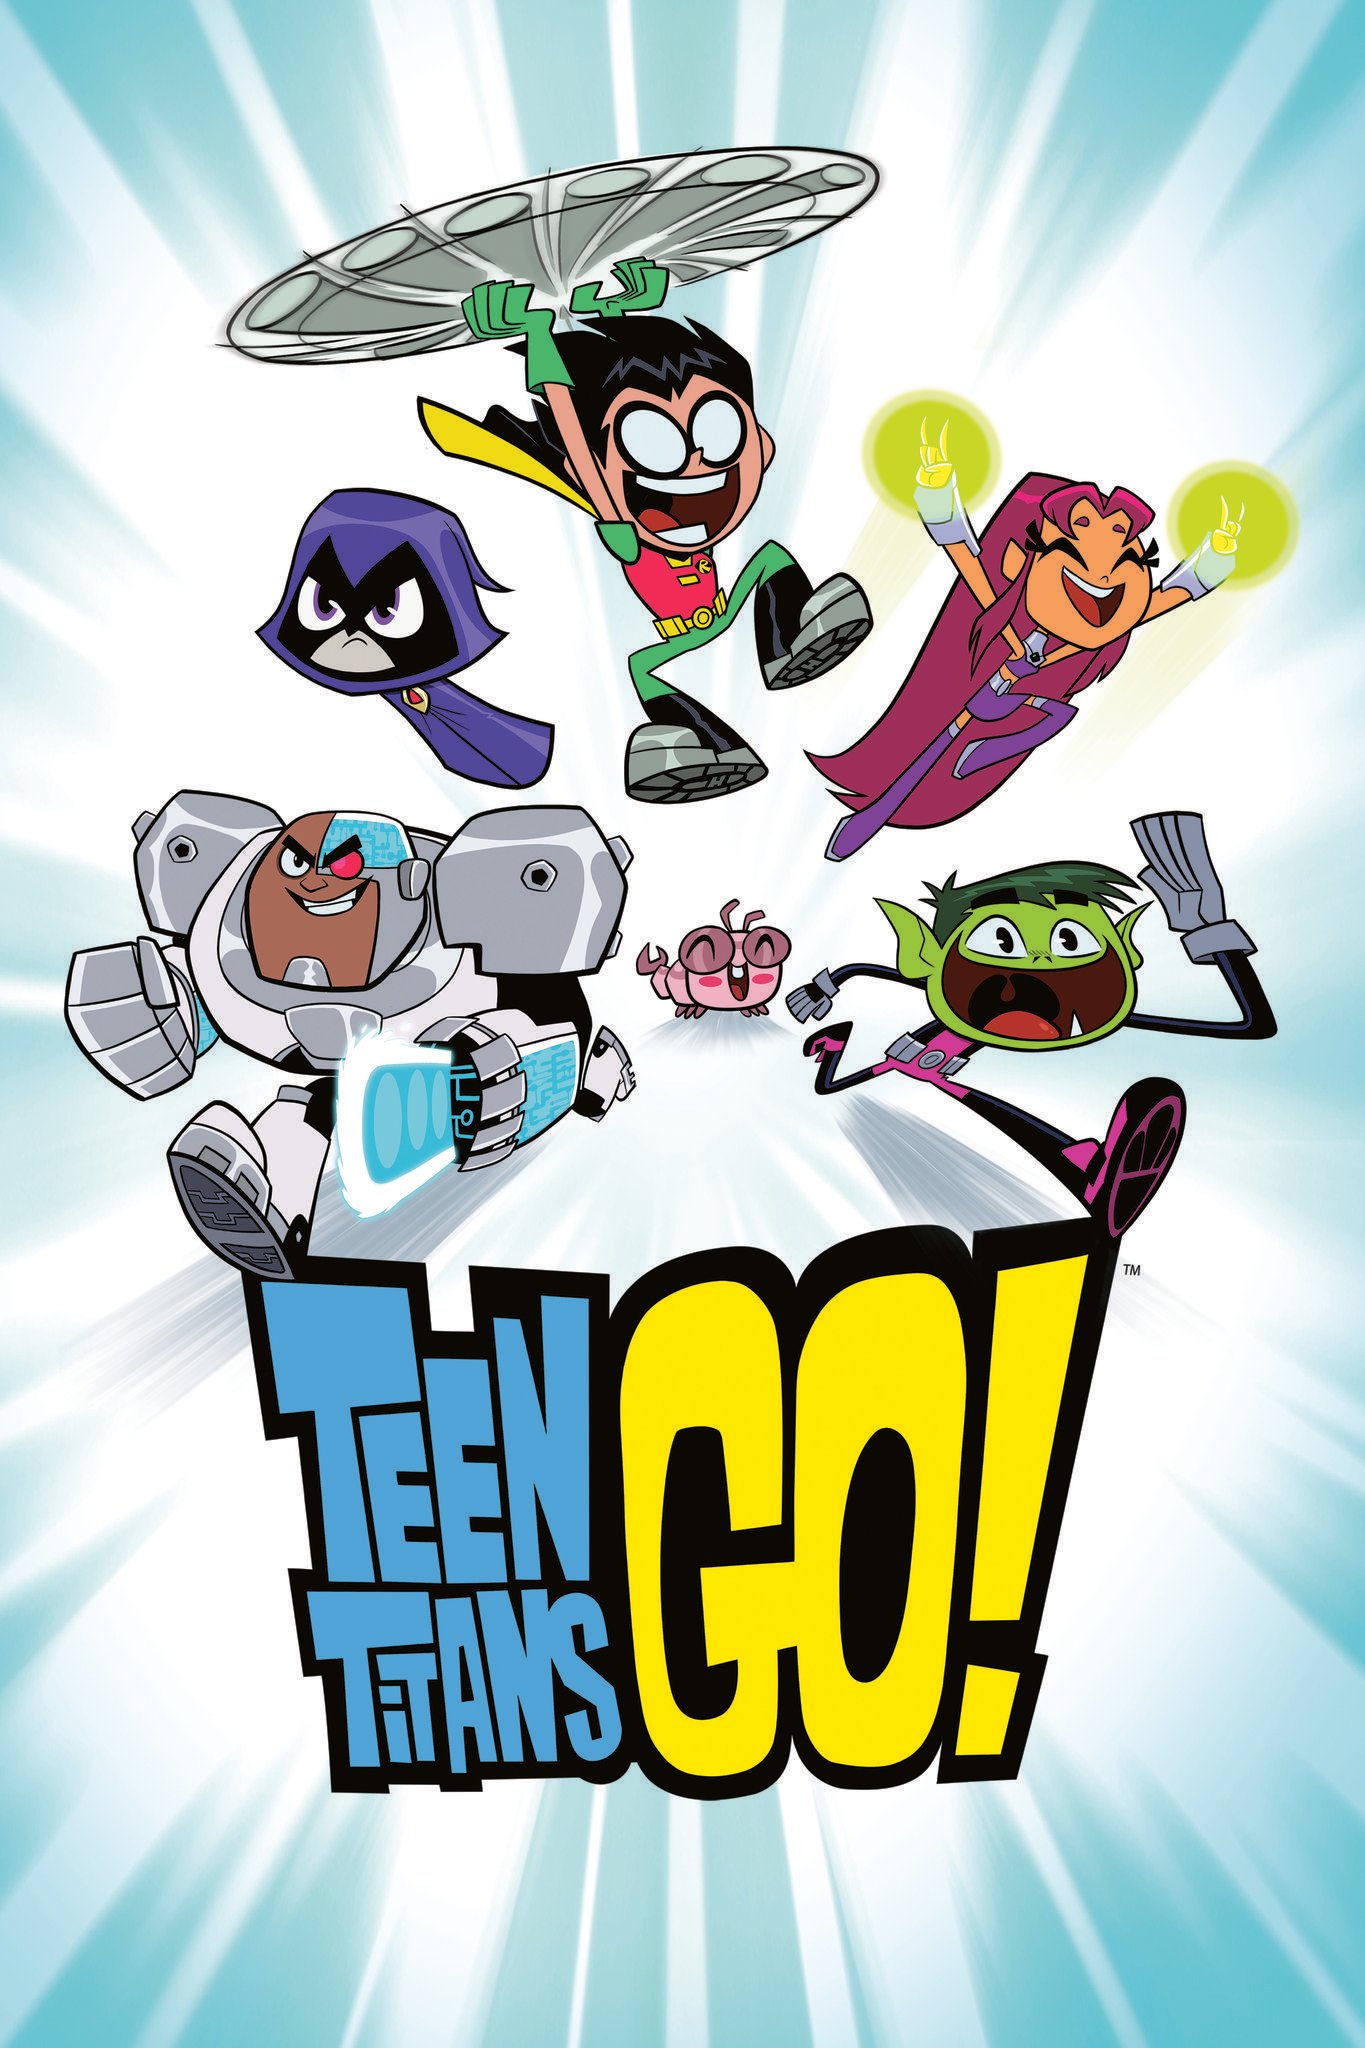 Teen Titans Go! (TV Series 2013– )